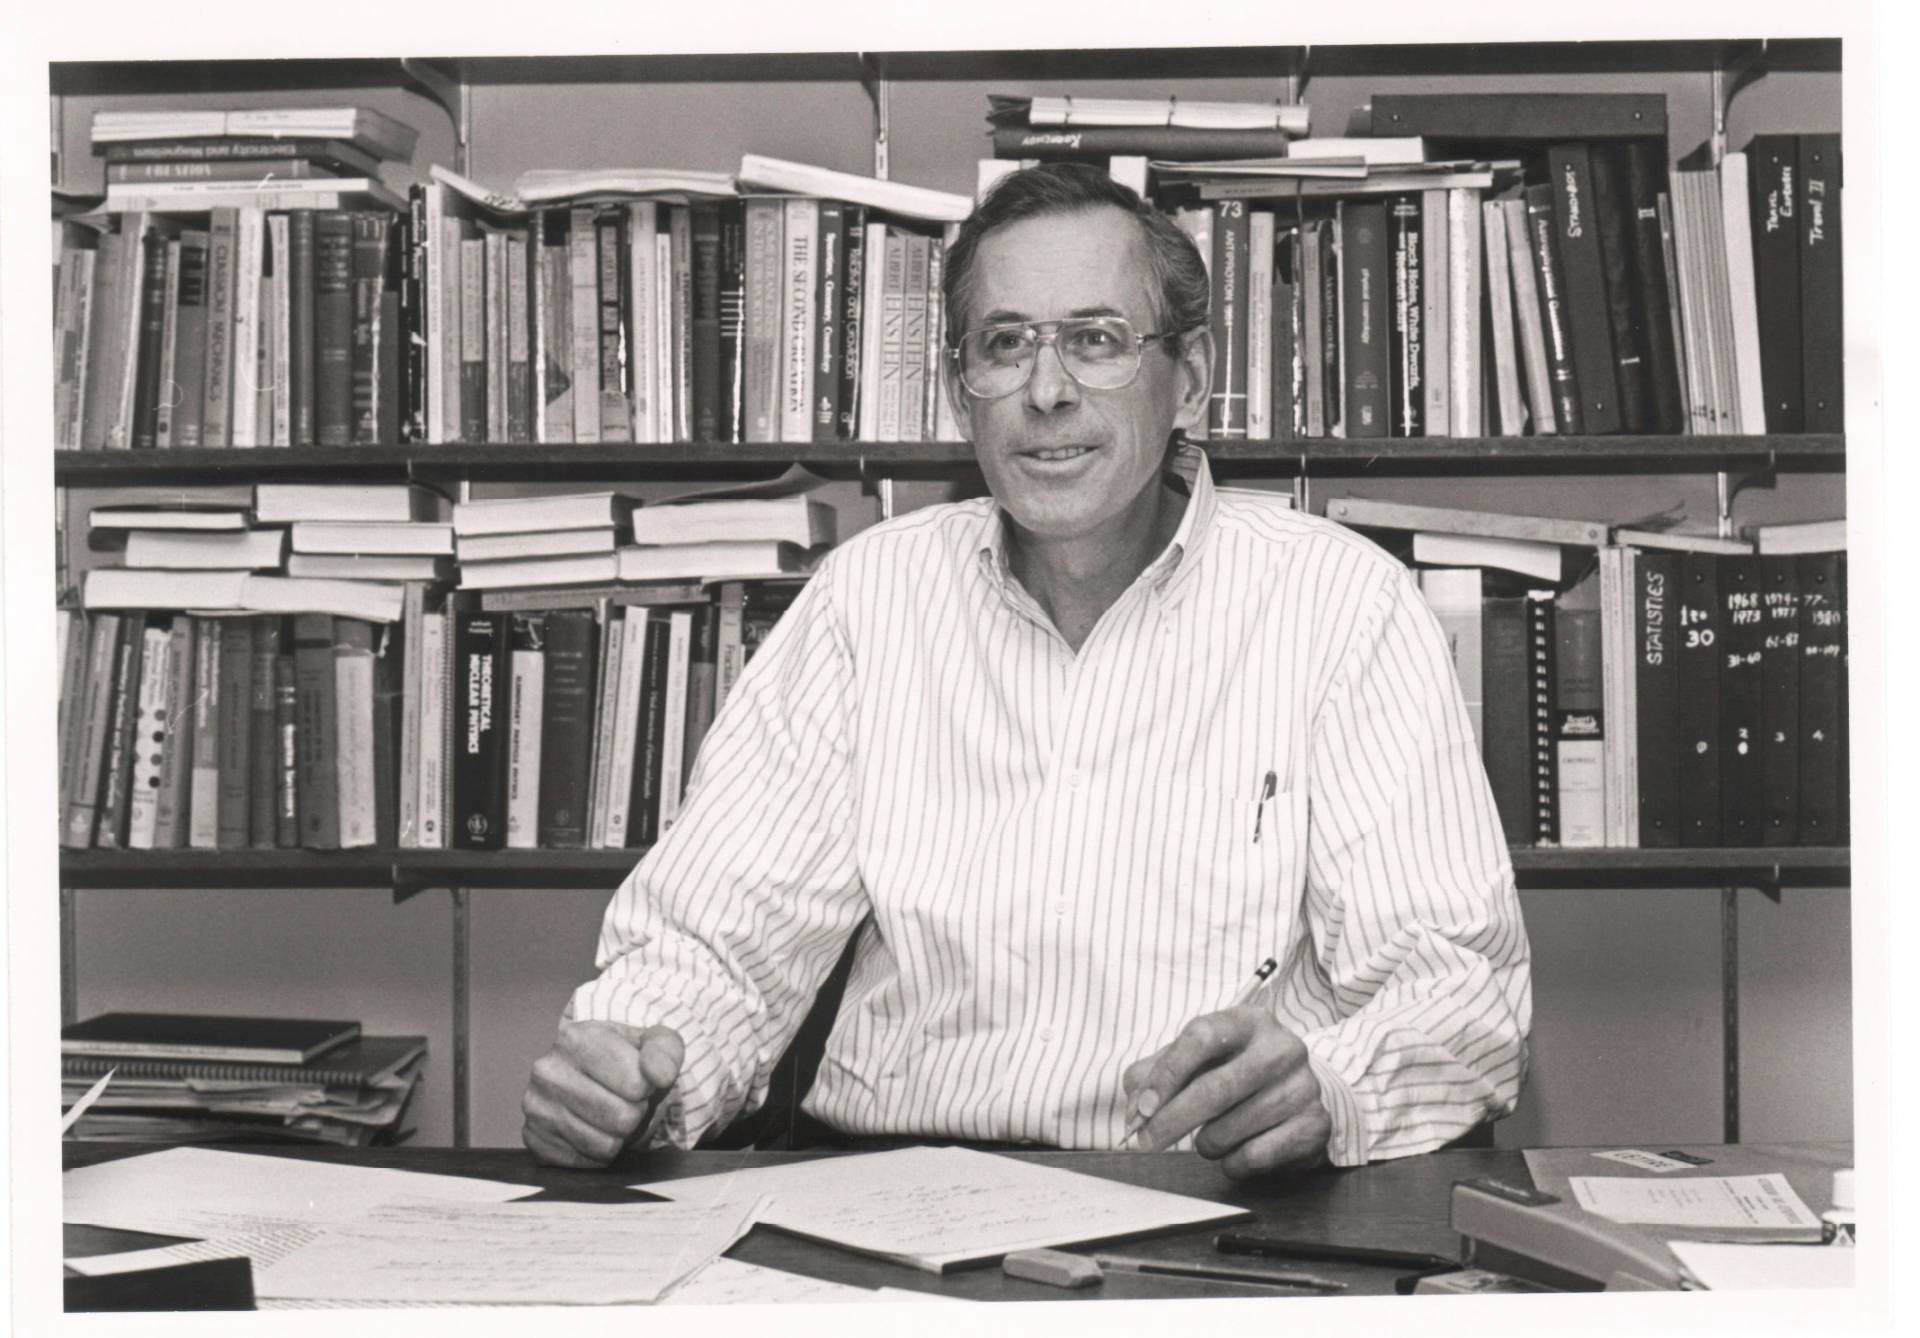 James Peebles in 1990